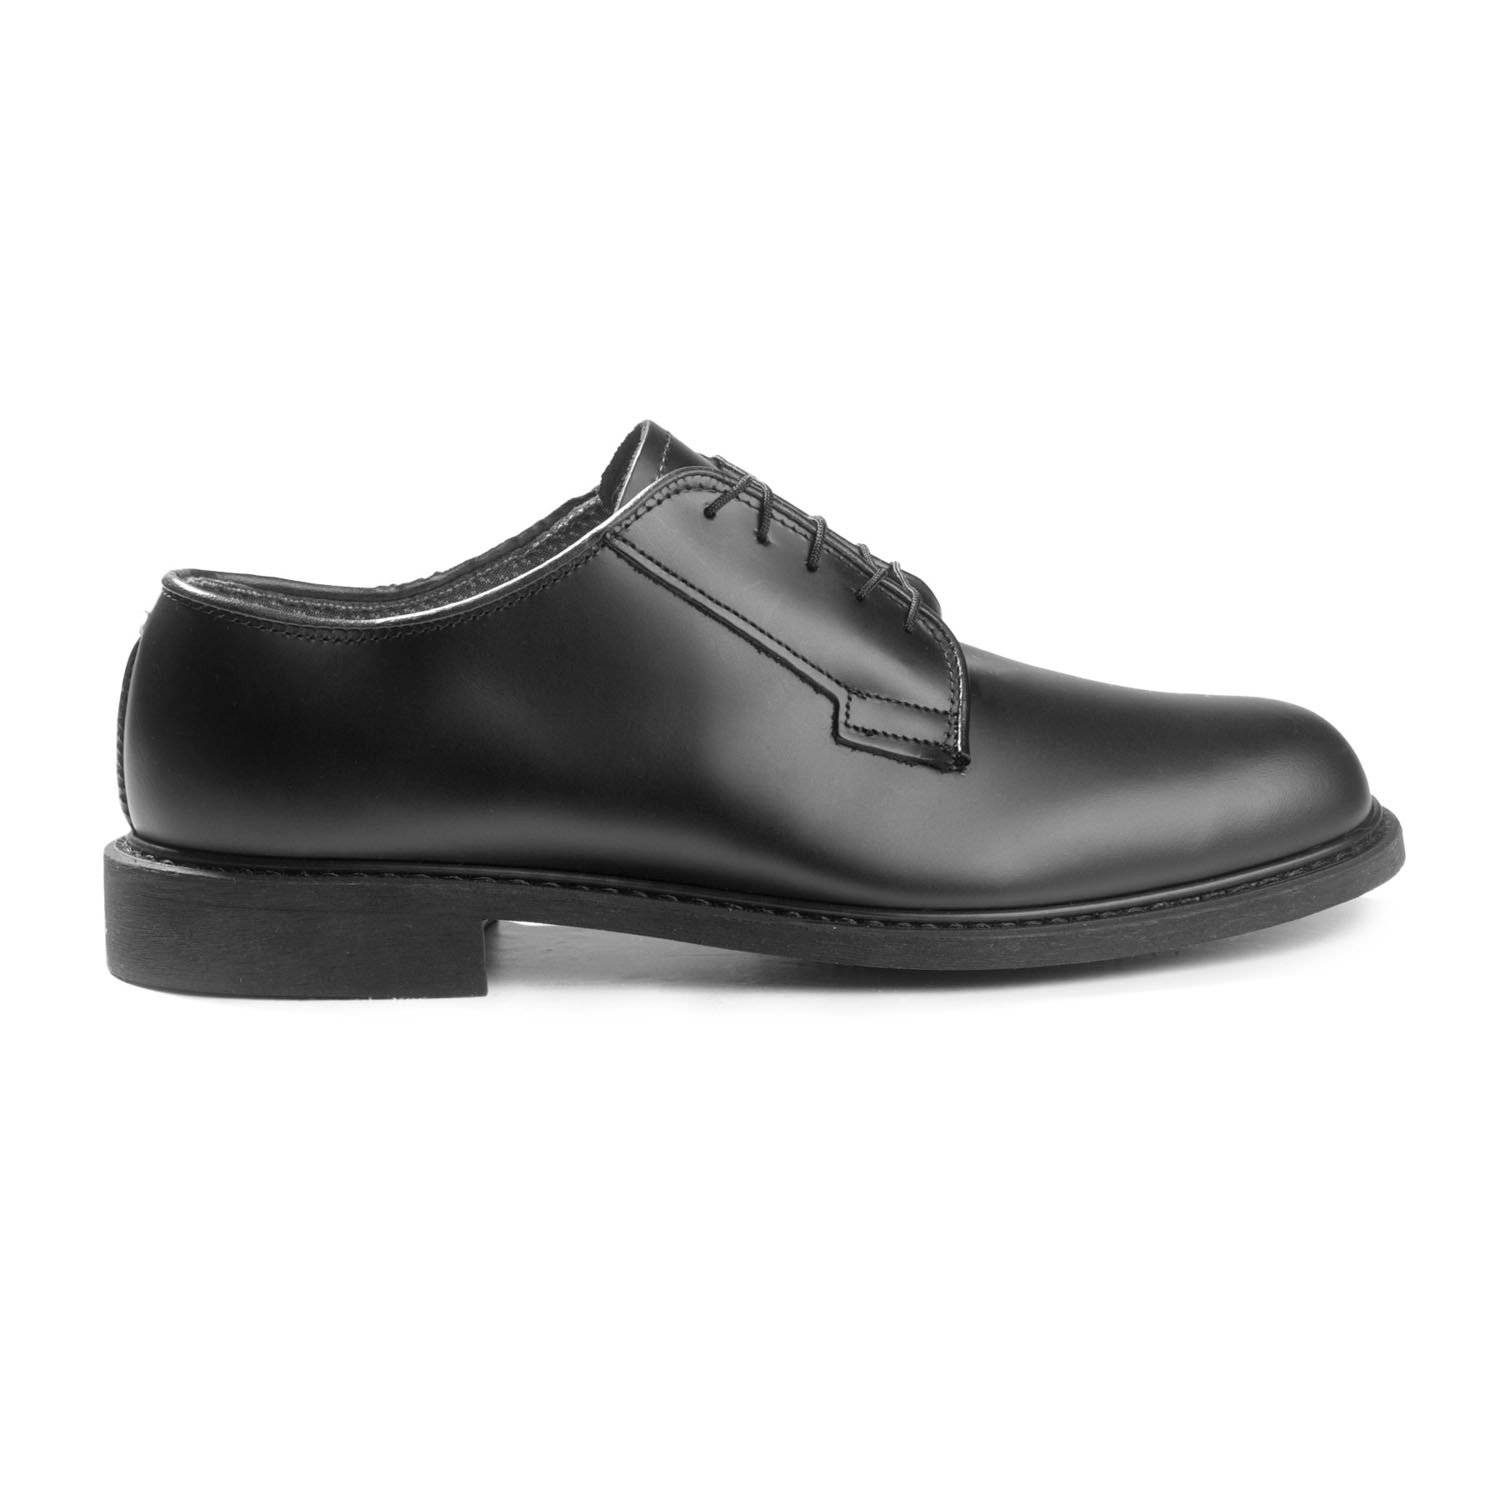 Bates  00769 women's Leather Uniform Oxford shoes  Black Size 7.5 EW 